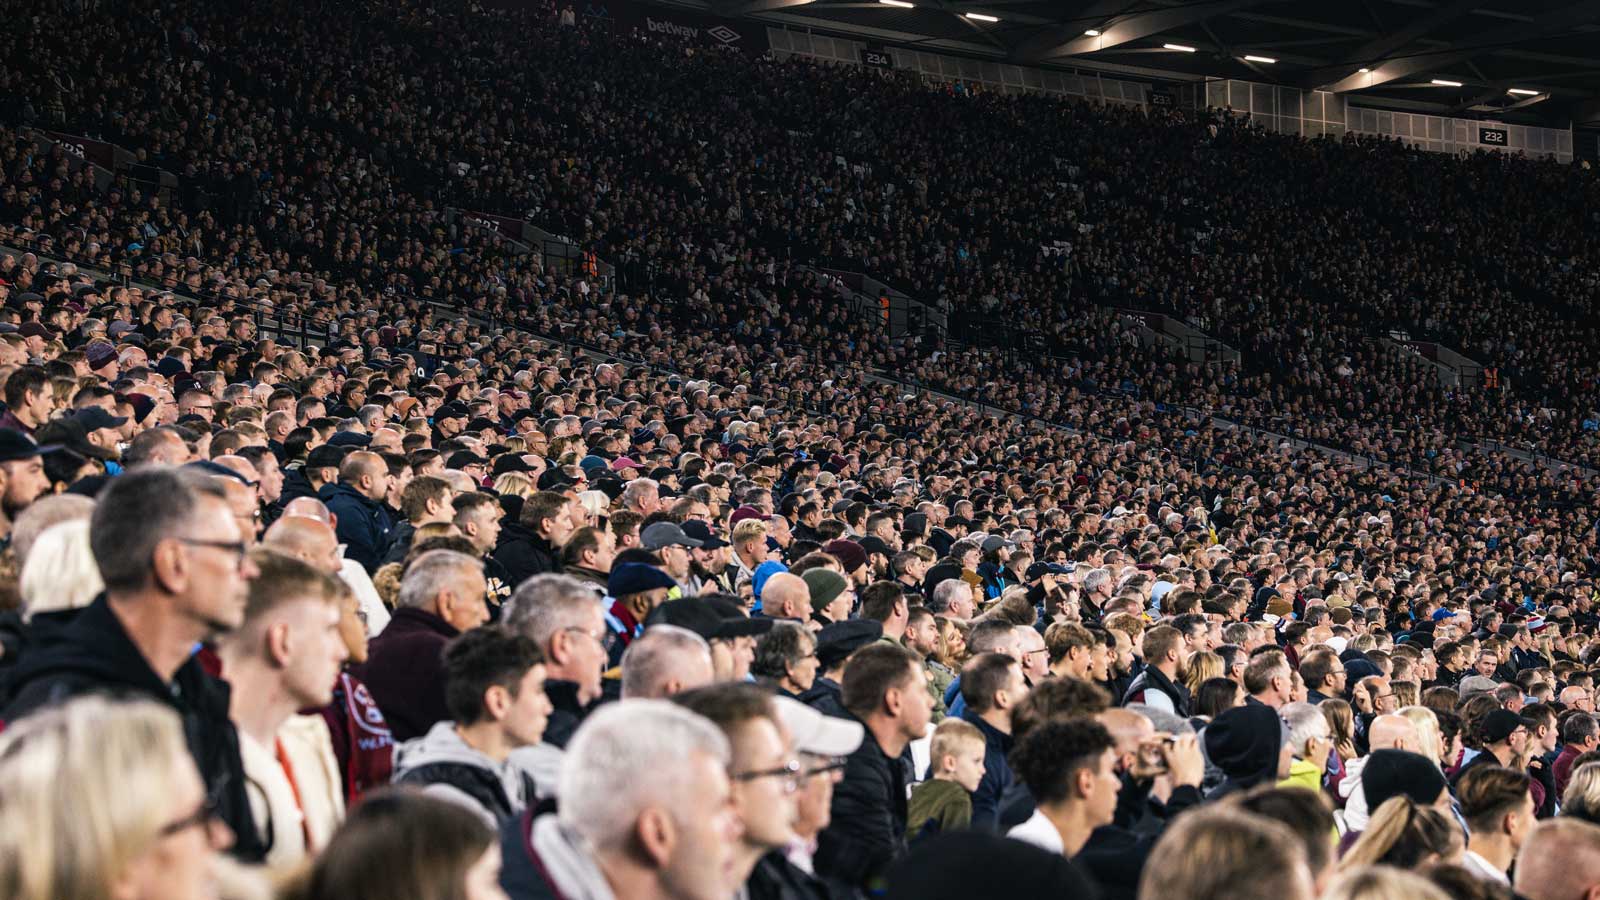 A full house at London Stadium